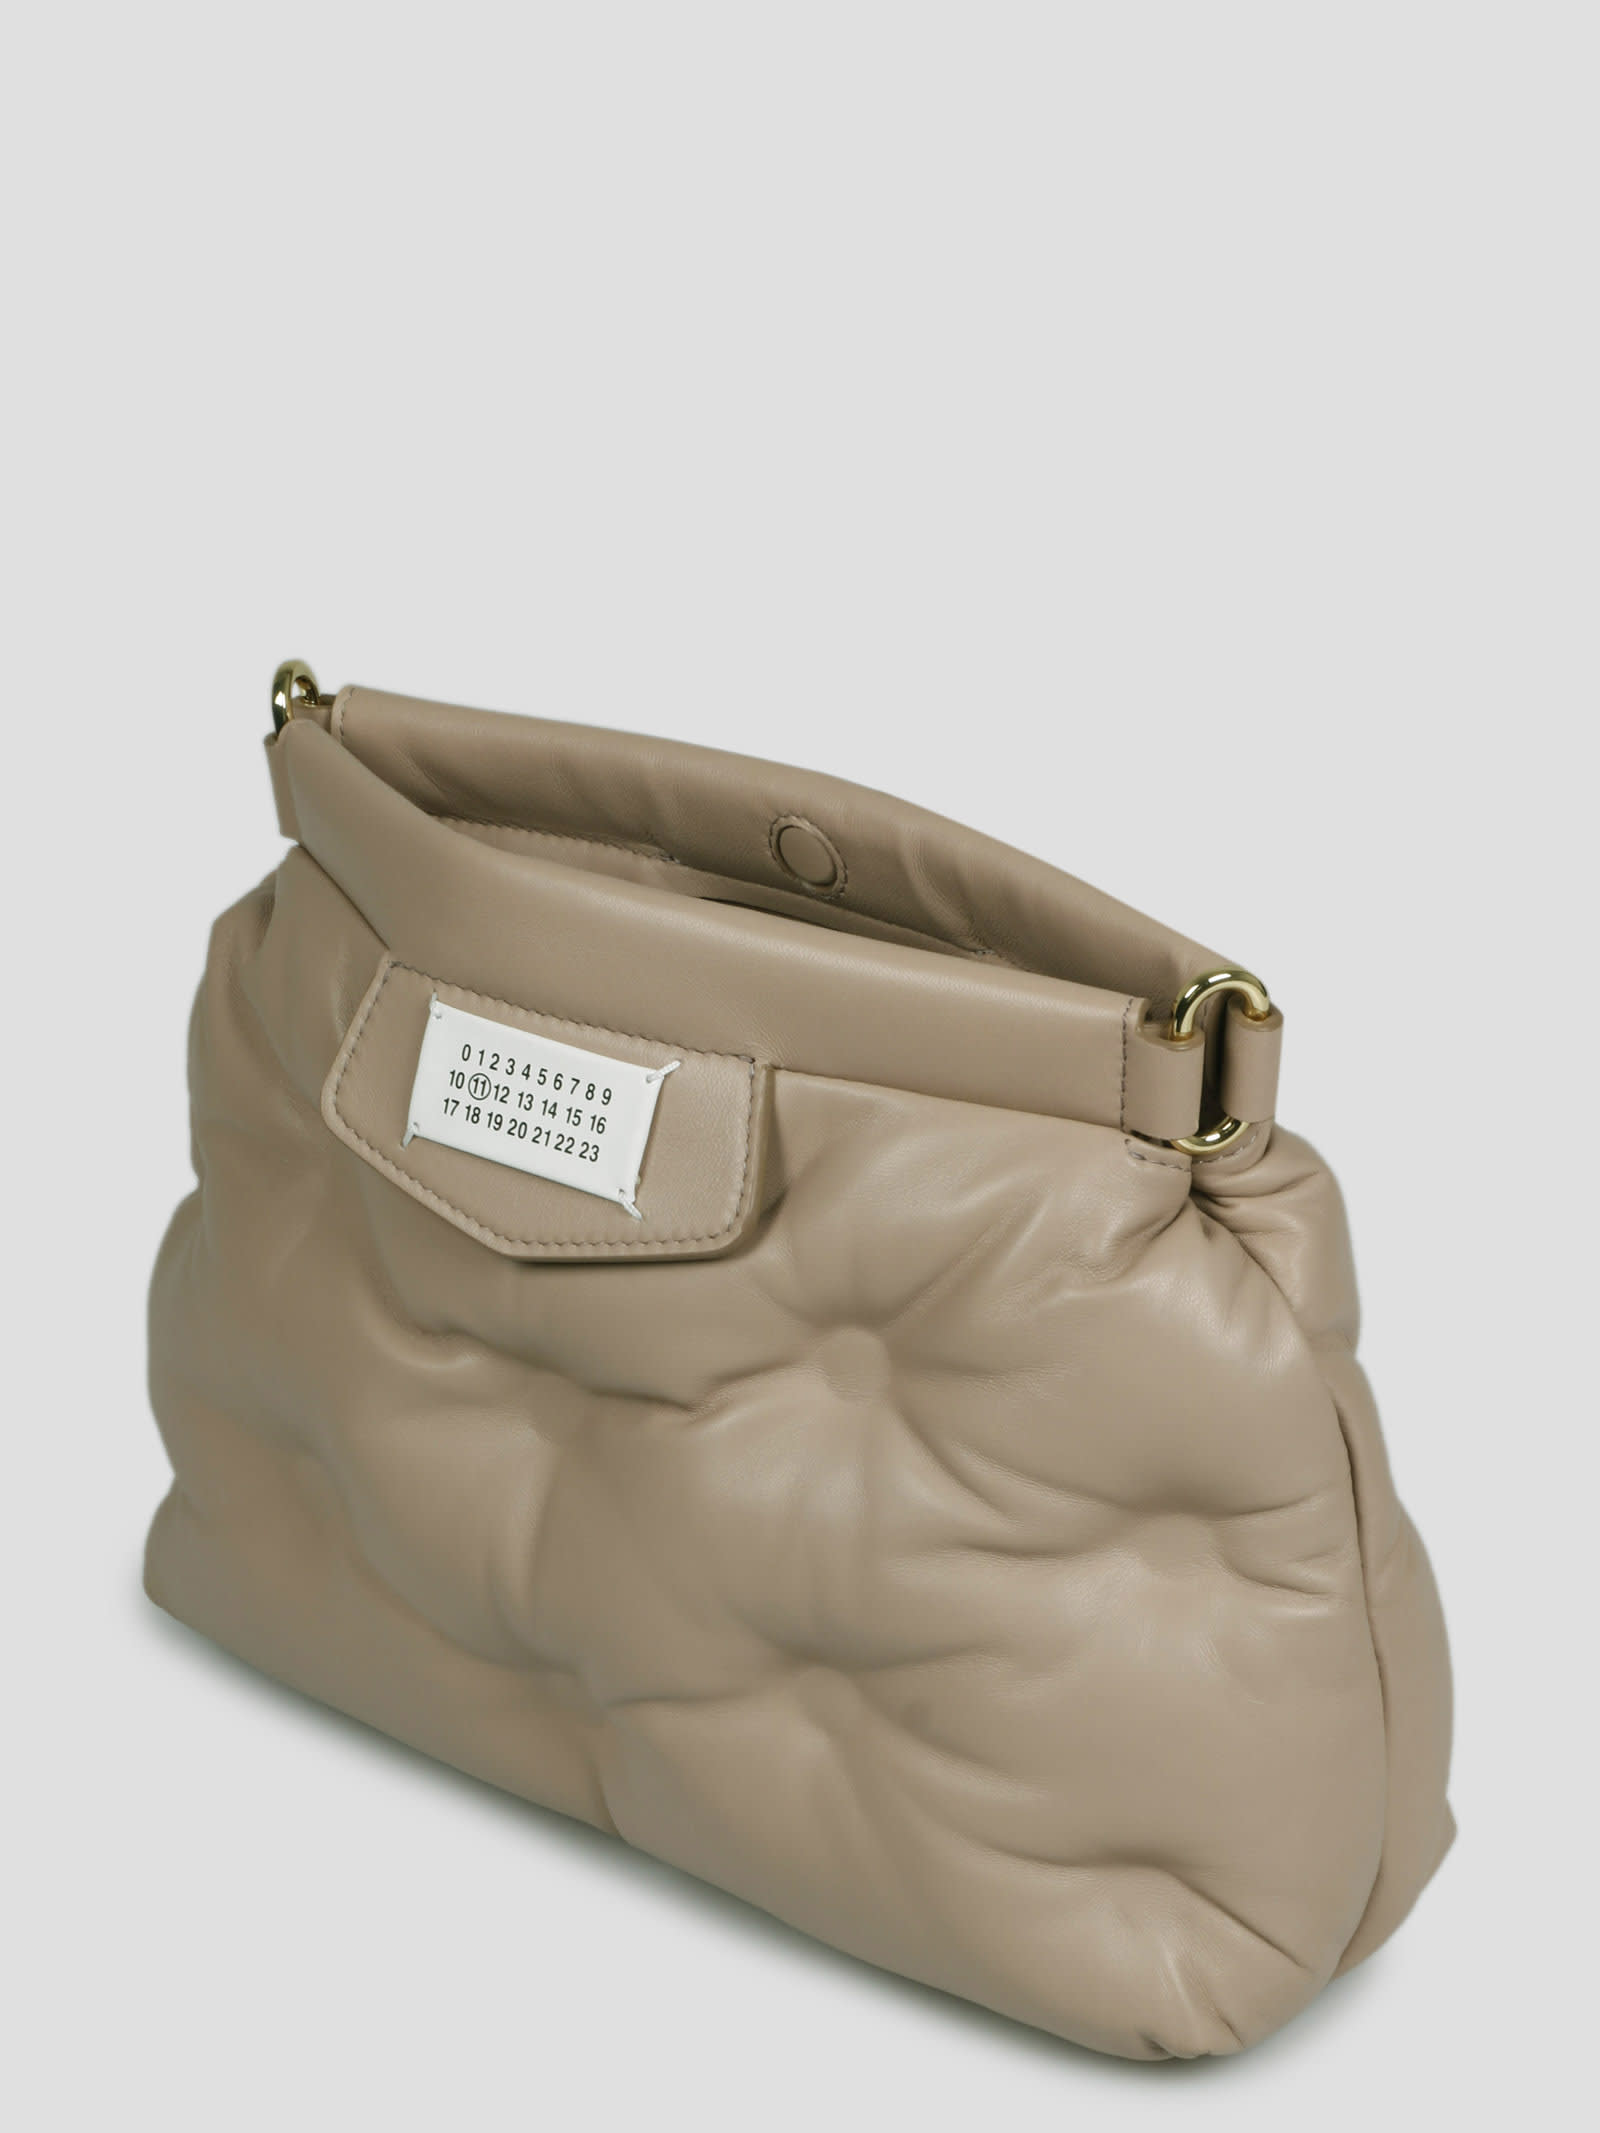 Glam Slam Classique Small Bag - Maison Margiela - Silver - Leather